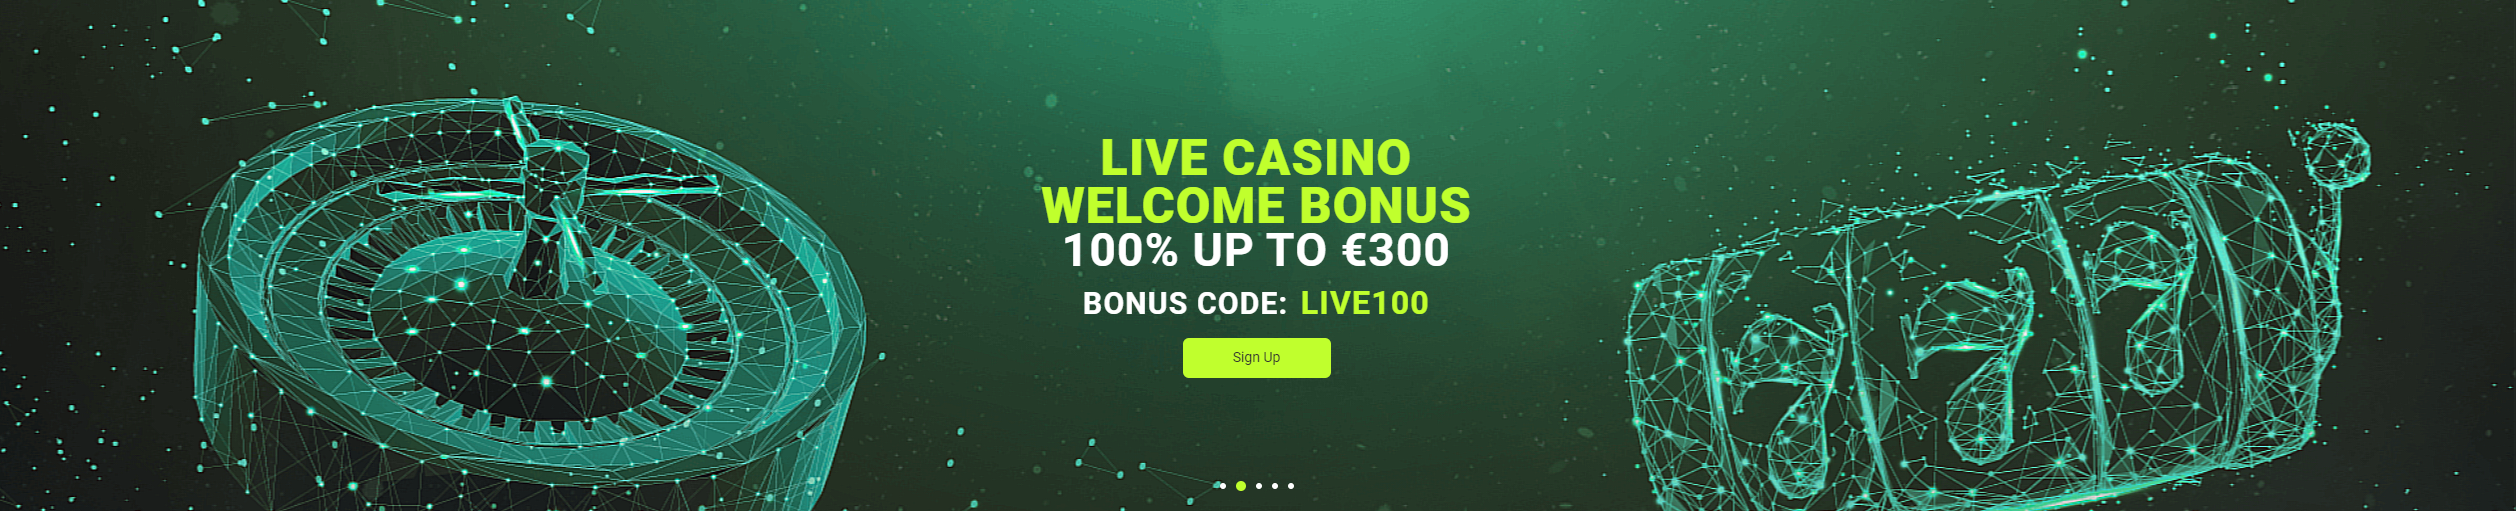 A 10 legjobb Winawin Casino online bónusz